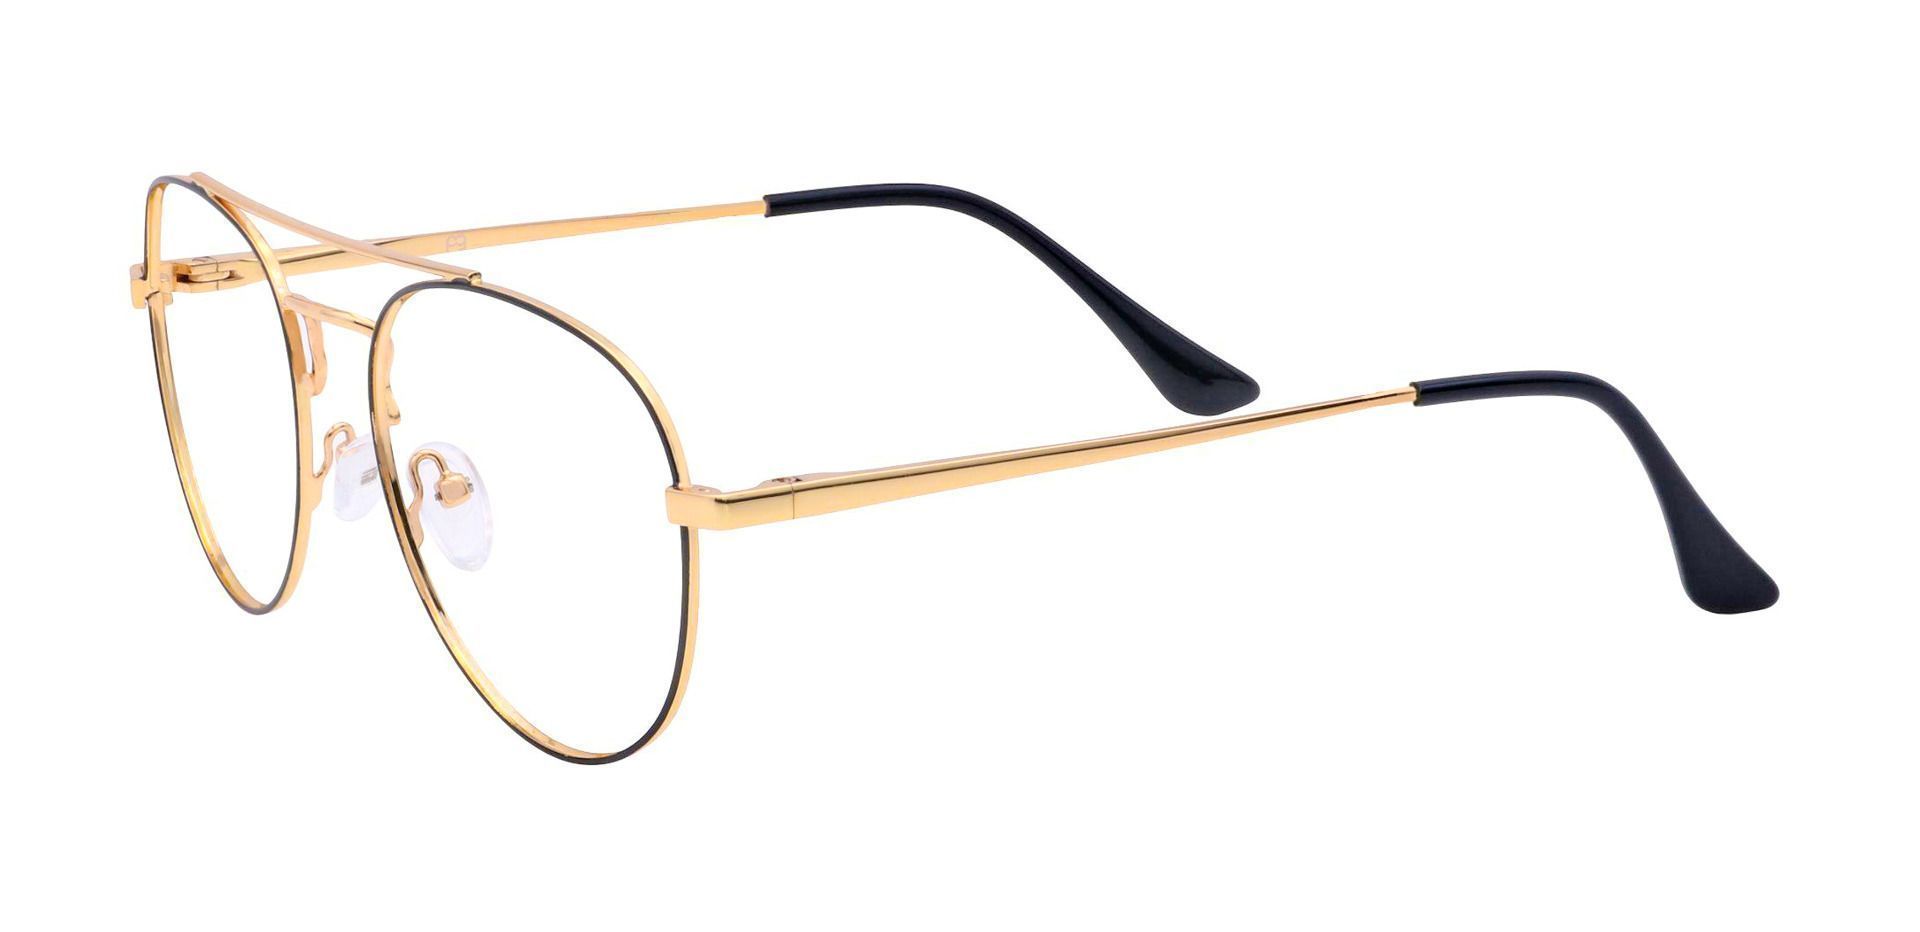 Trapp Aviator Progressive Glasses - Gold